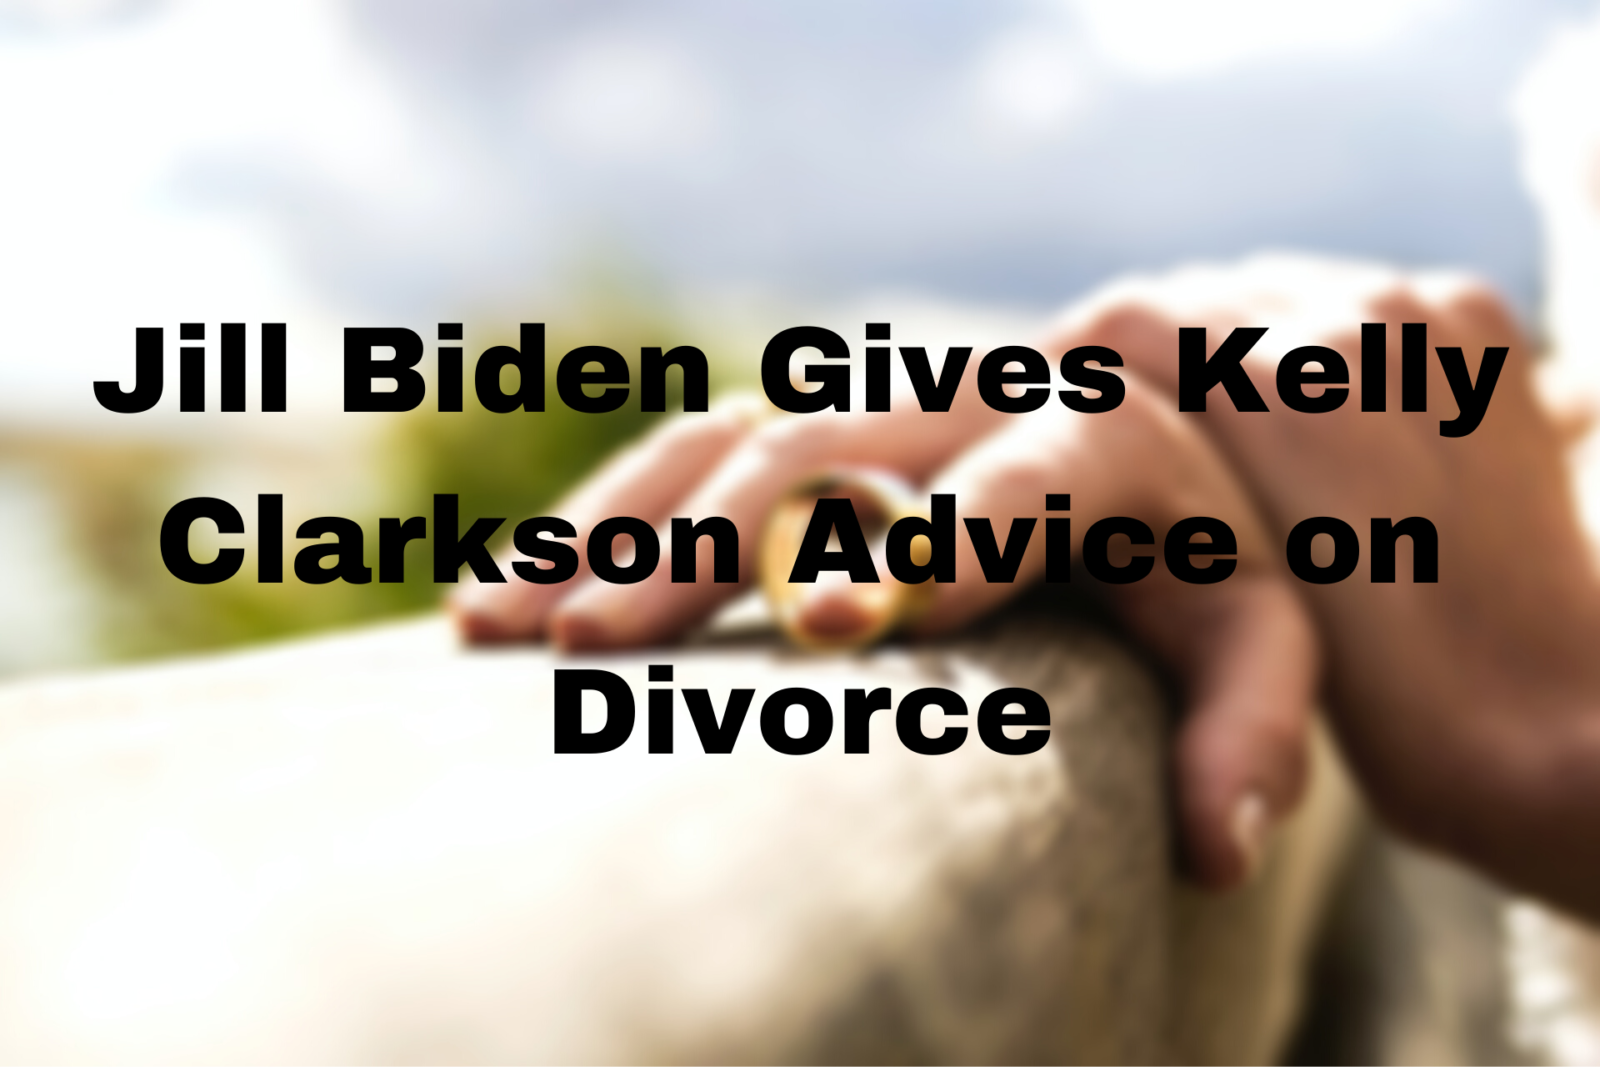 Stock photo with text: "Jill Biden Gives Kelly Clarkson Advice on Divorce"